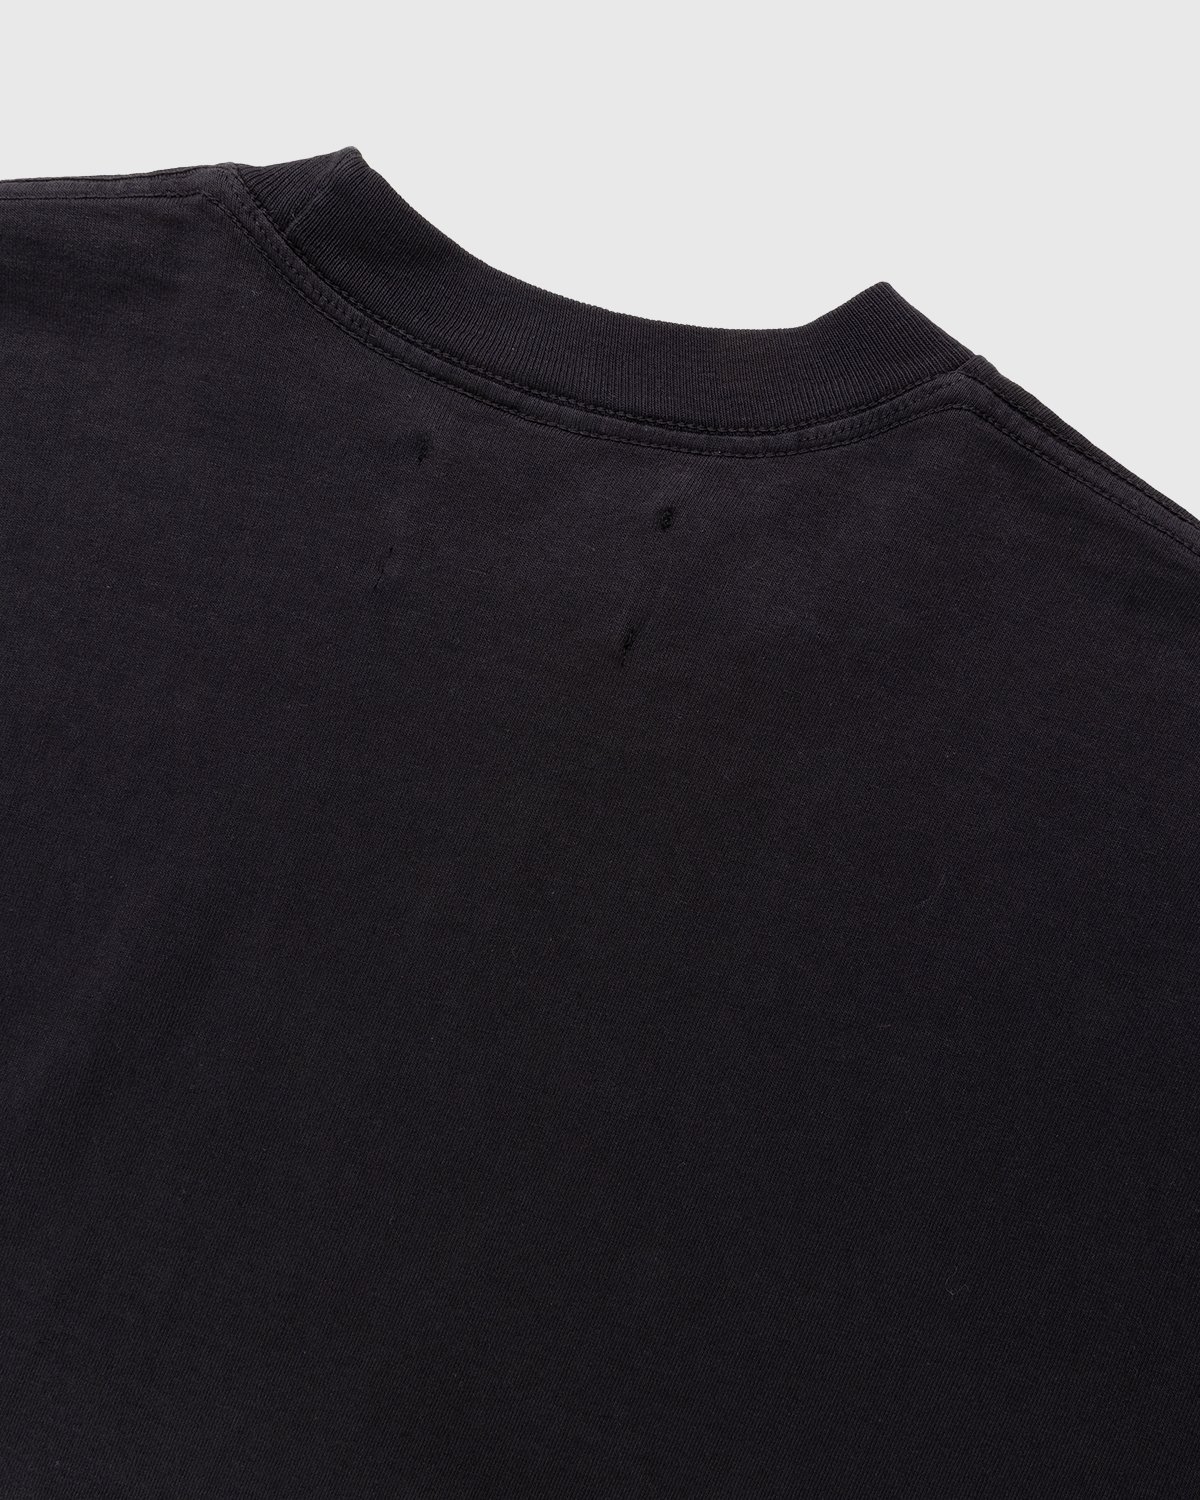 Polite Worldwide - Lava Lamp T-Shirt Black - Clothing - Black - Image 4